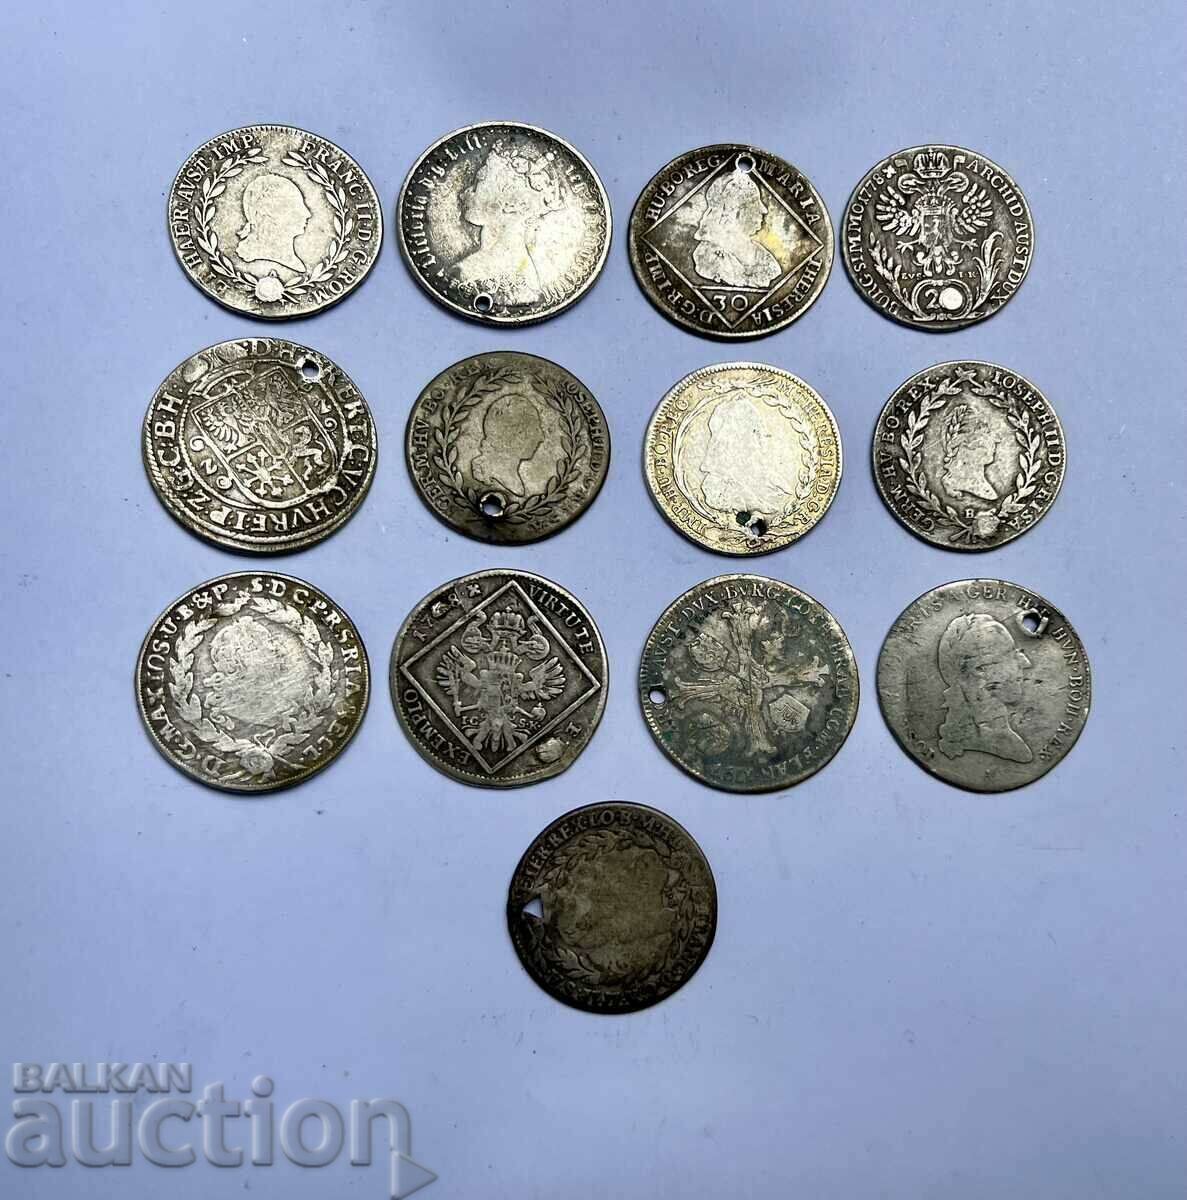 Lot of 13 silver coins European coins